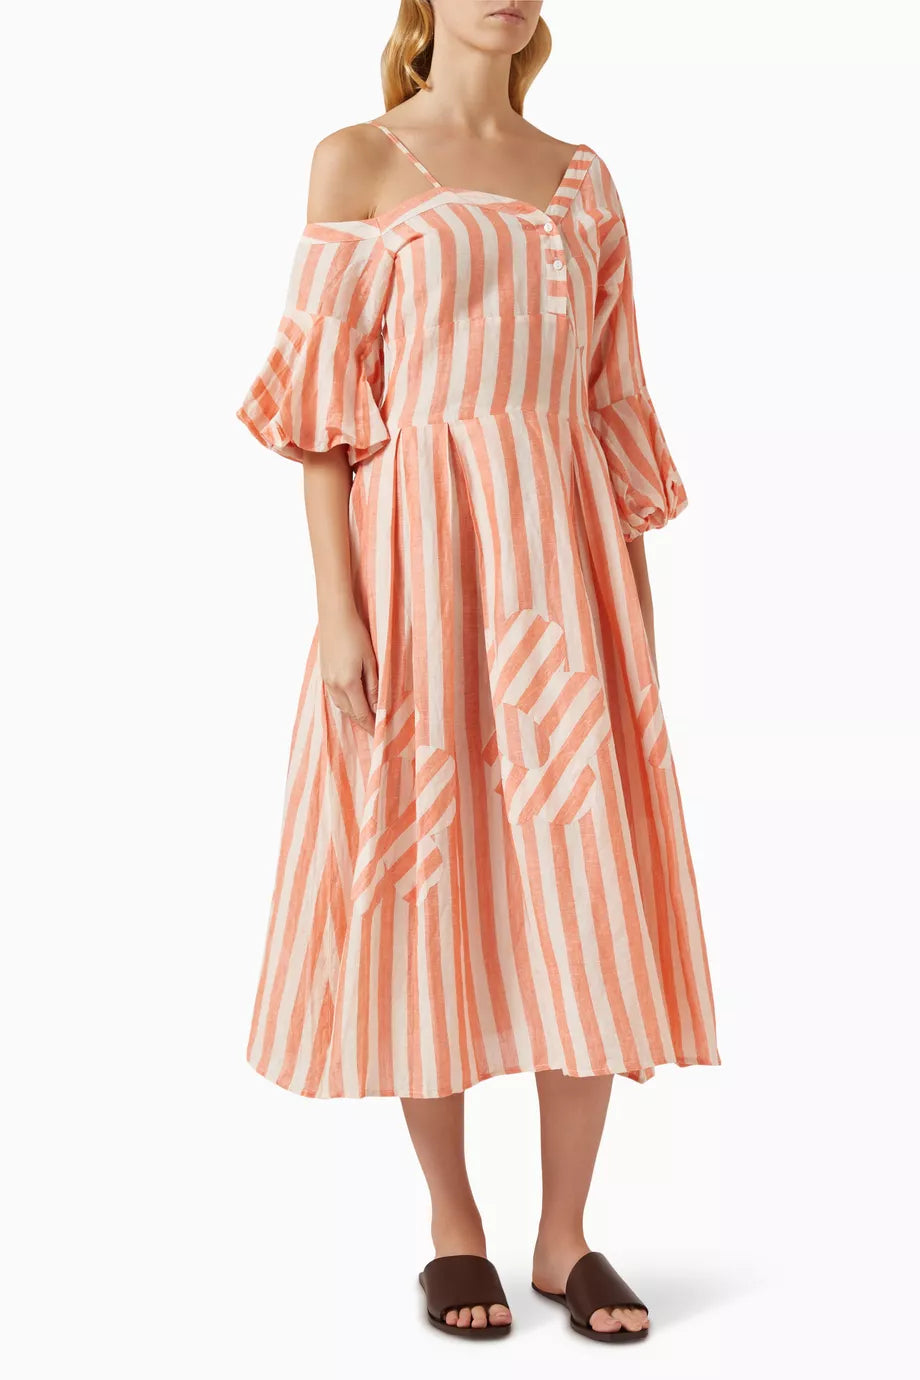 Stripe One Side Offshldr Dress